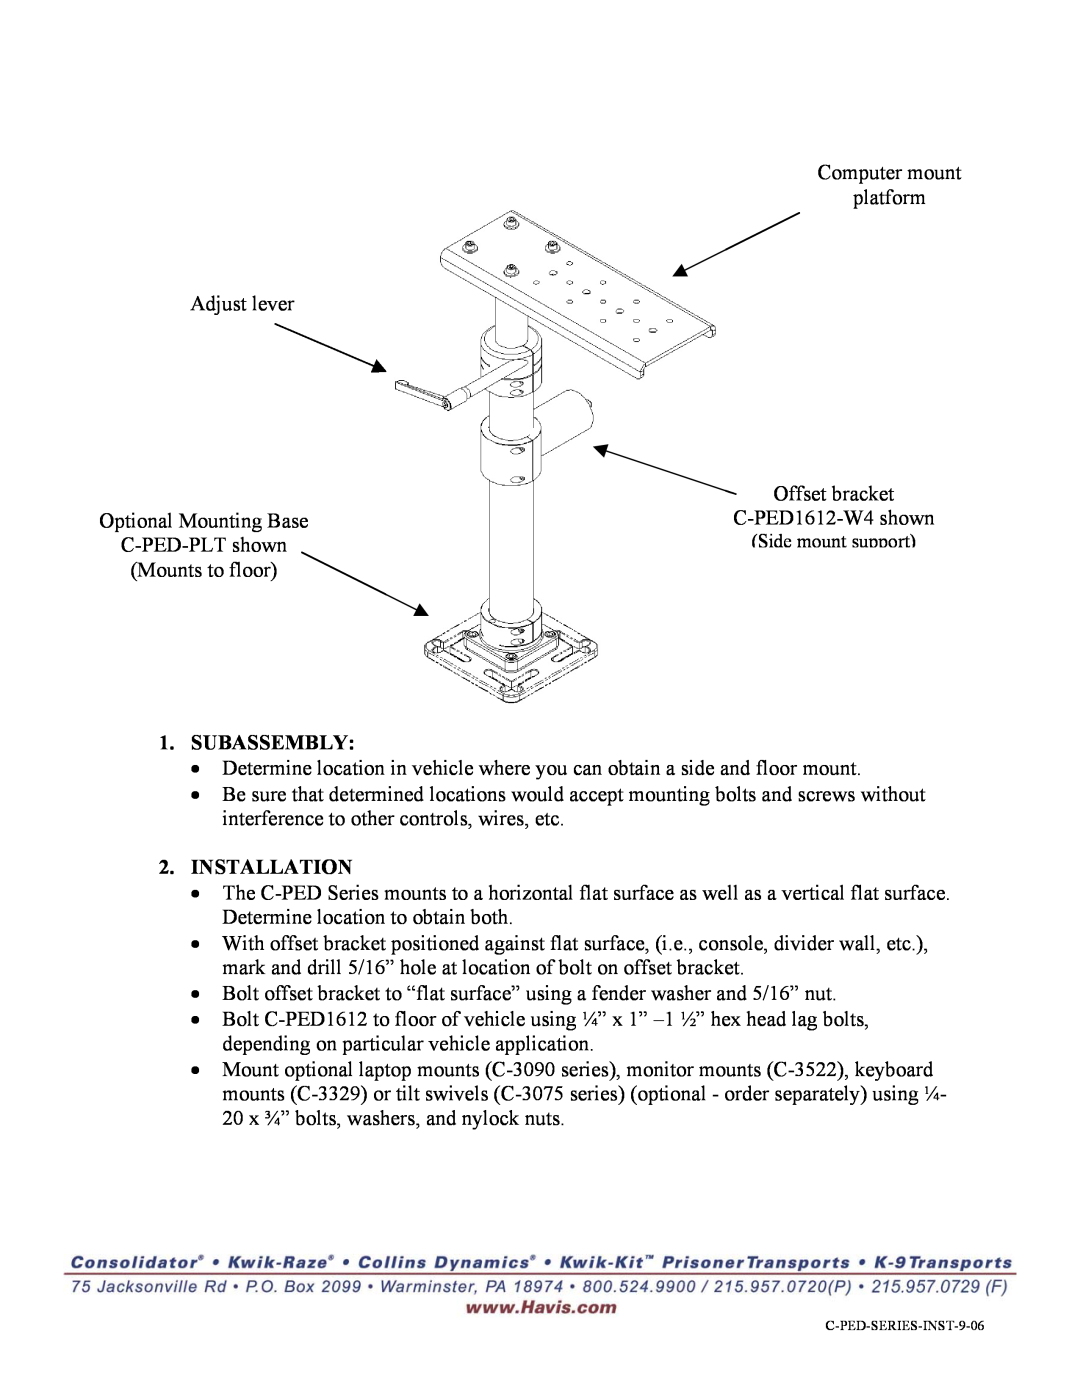 Havis-Shields C-PED Series manual Subassembly, Installation 